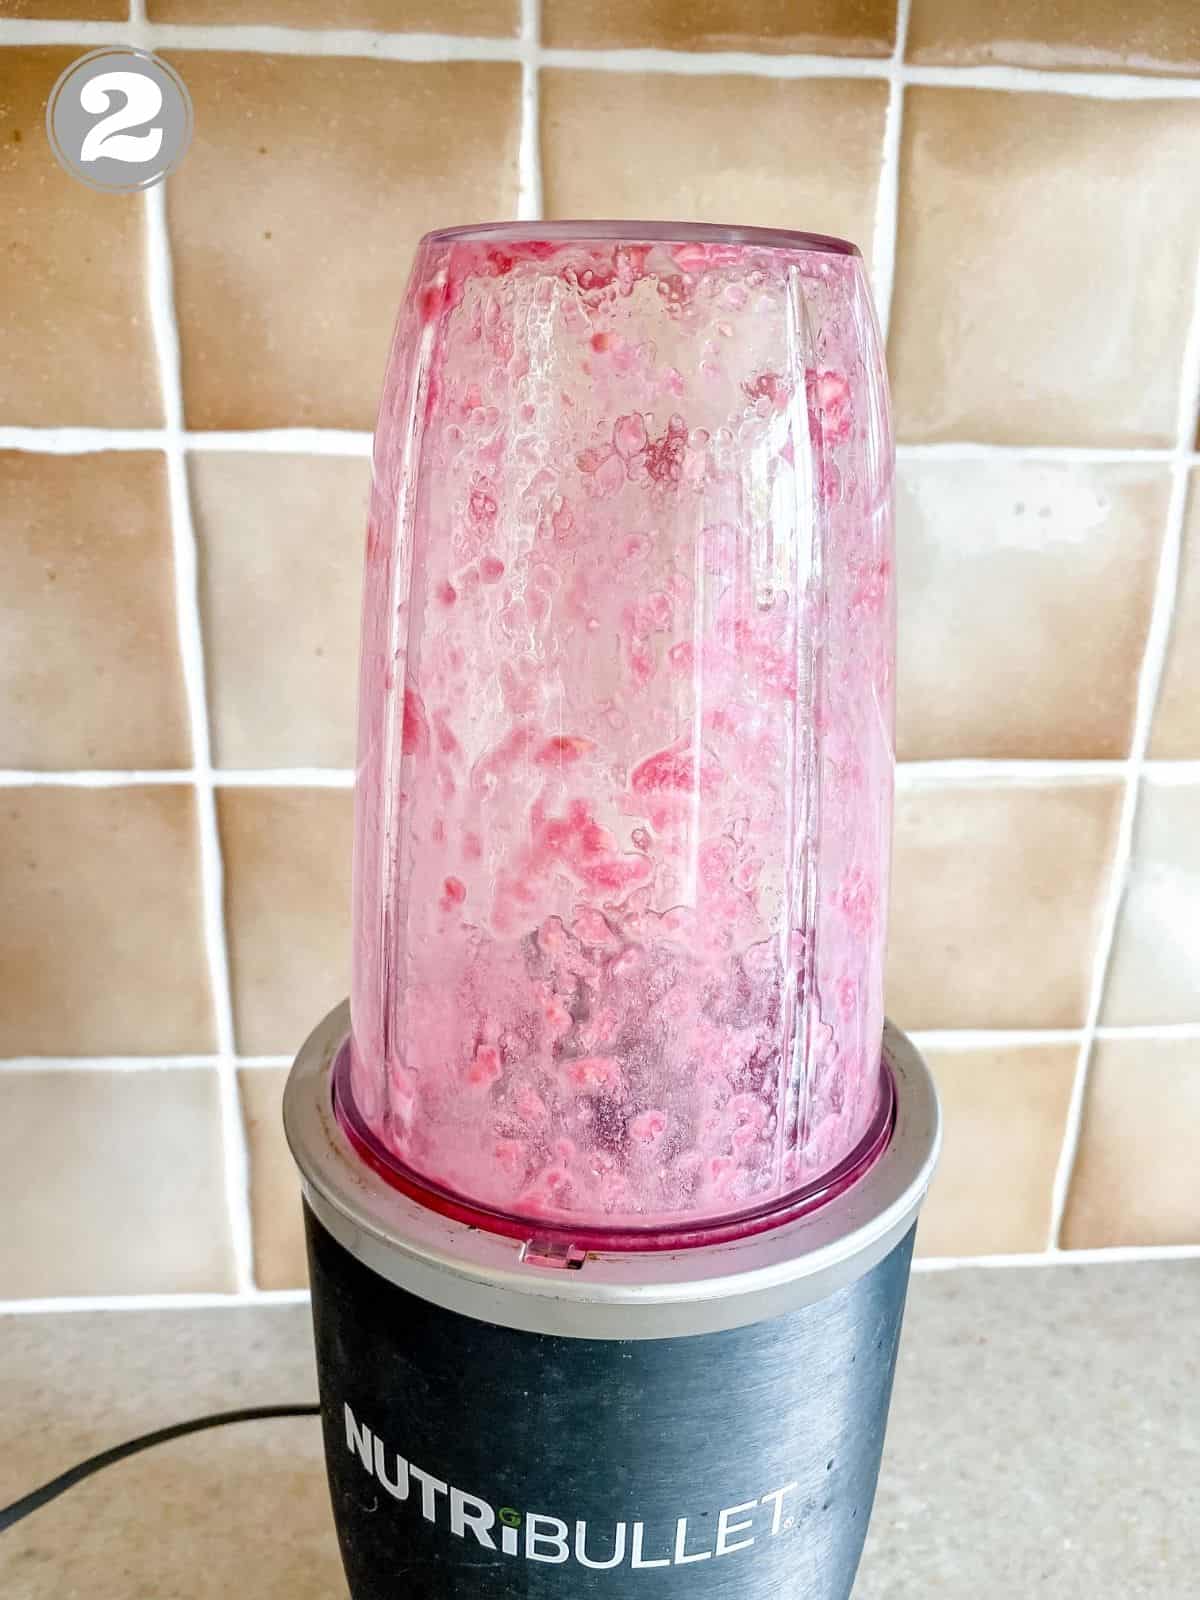 pomegranate juice in a blender.